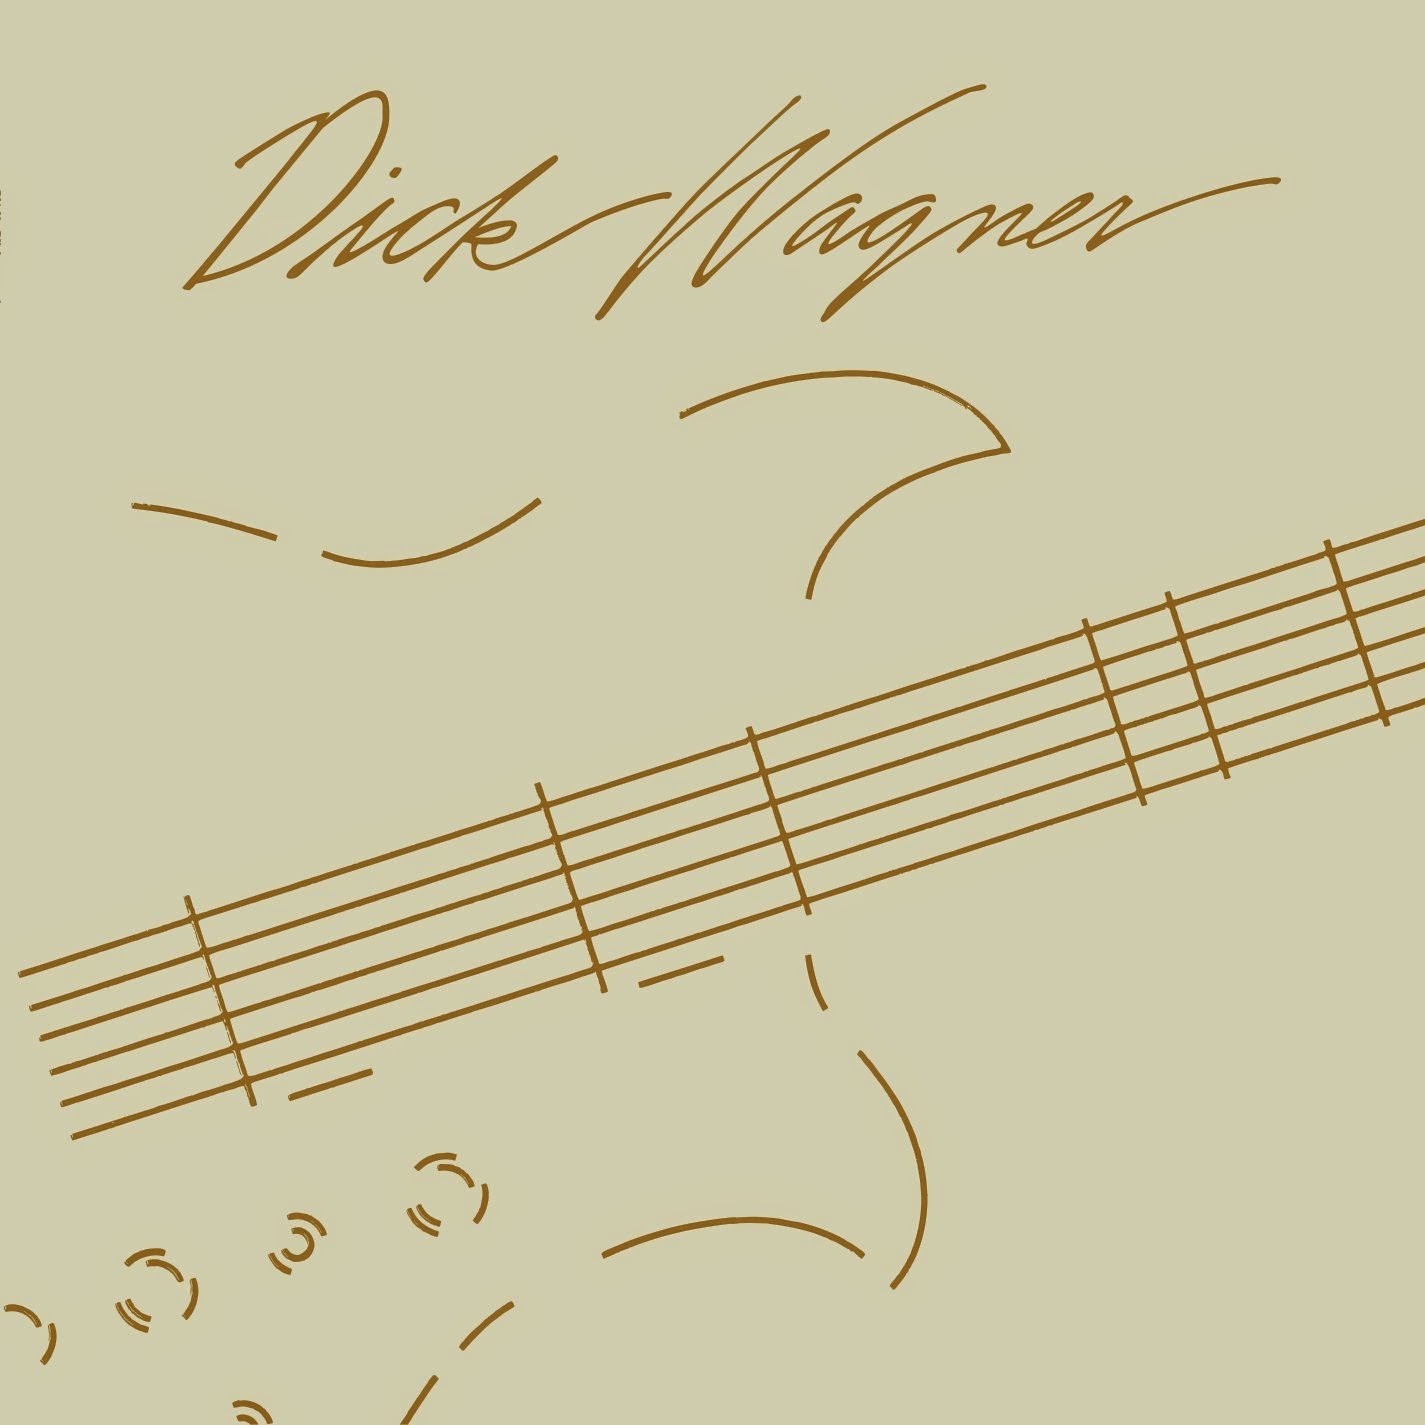 Dick Wagner's Dick Wagner LP